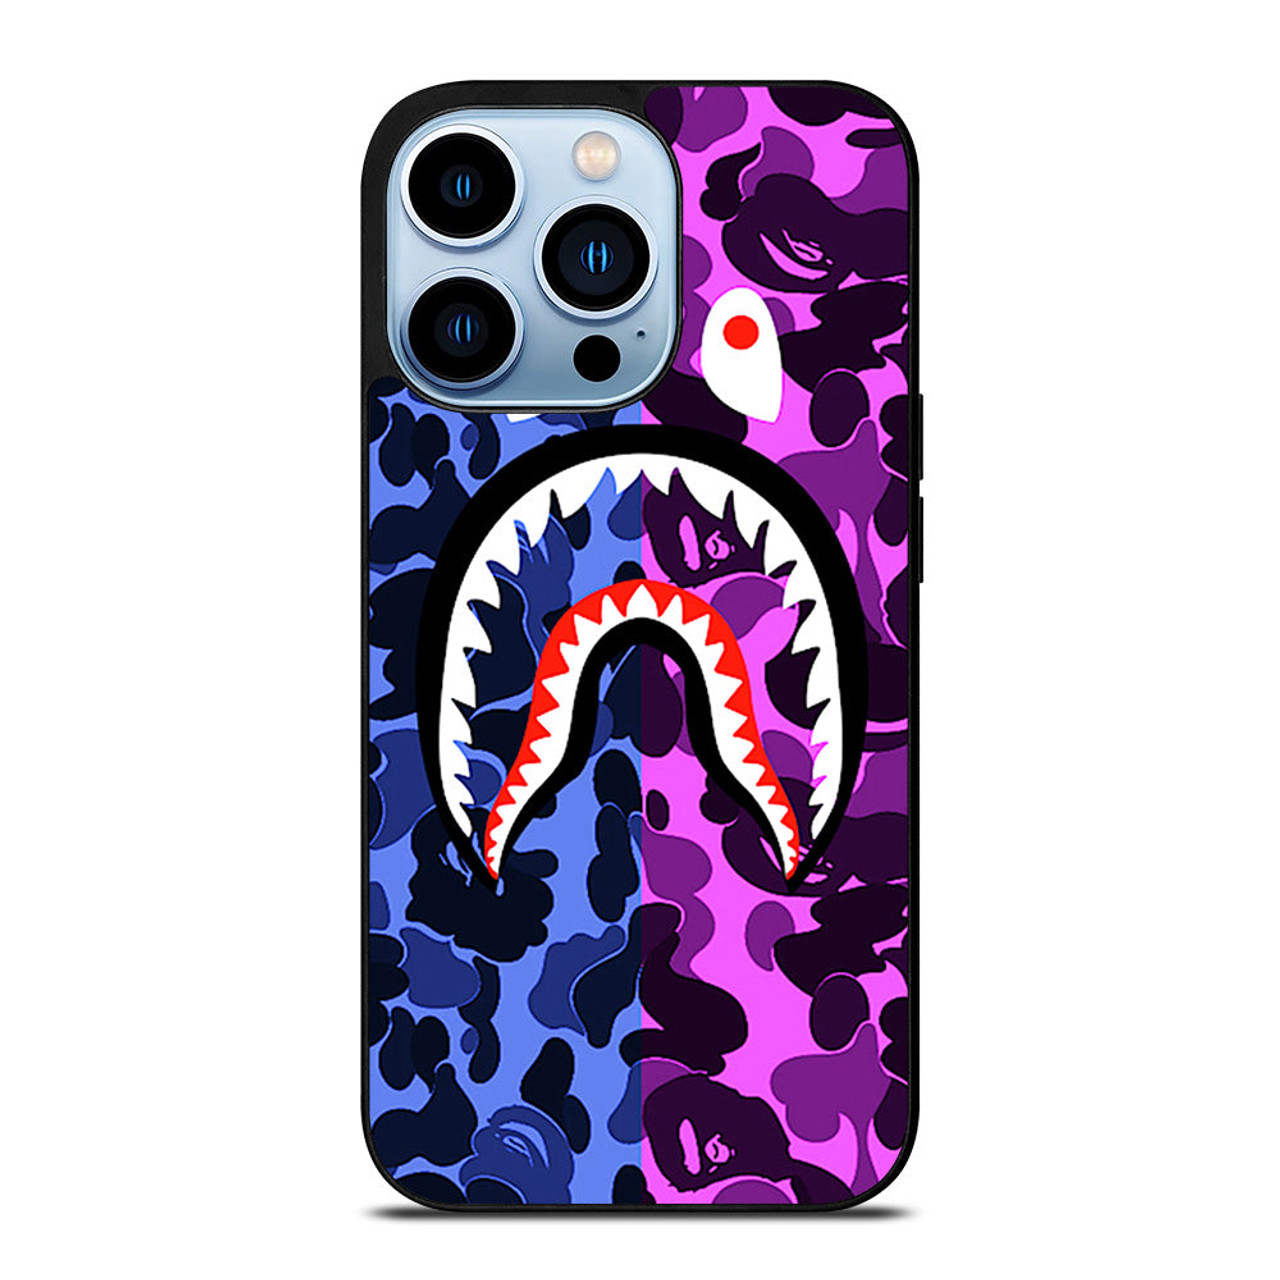 Supreme Bape Camo Shark iPhone 12, iPhone 12 Mini